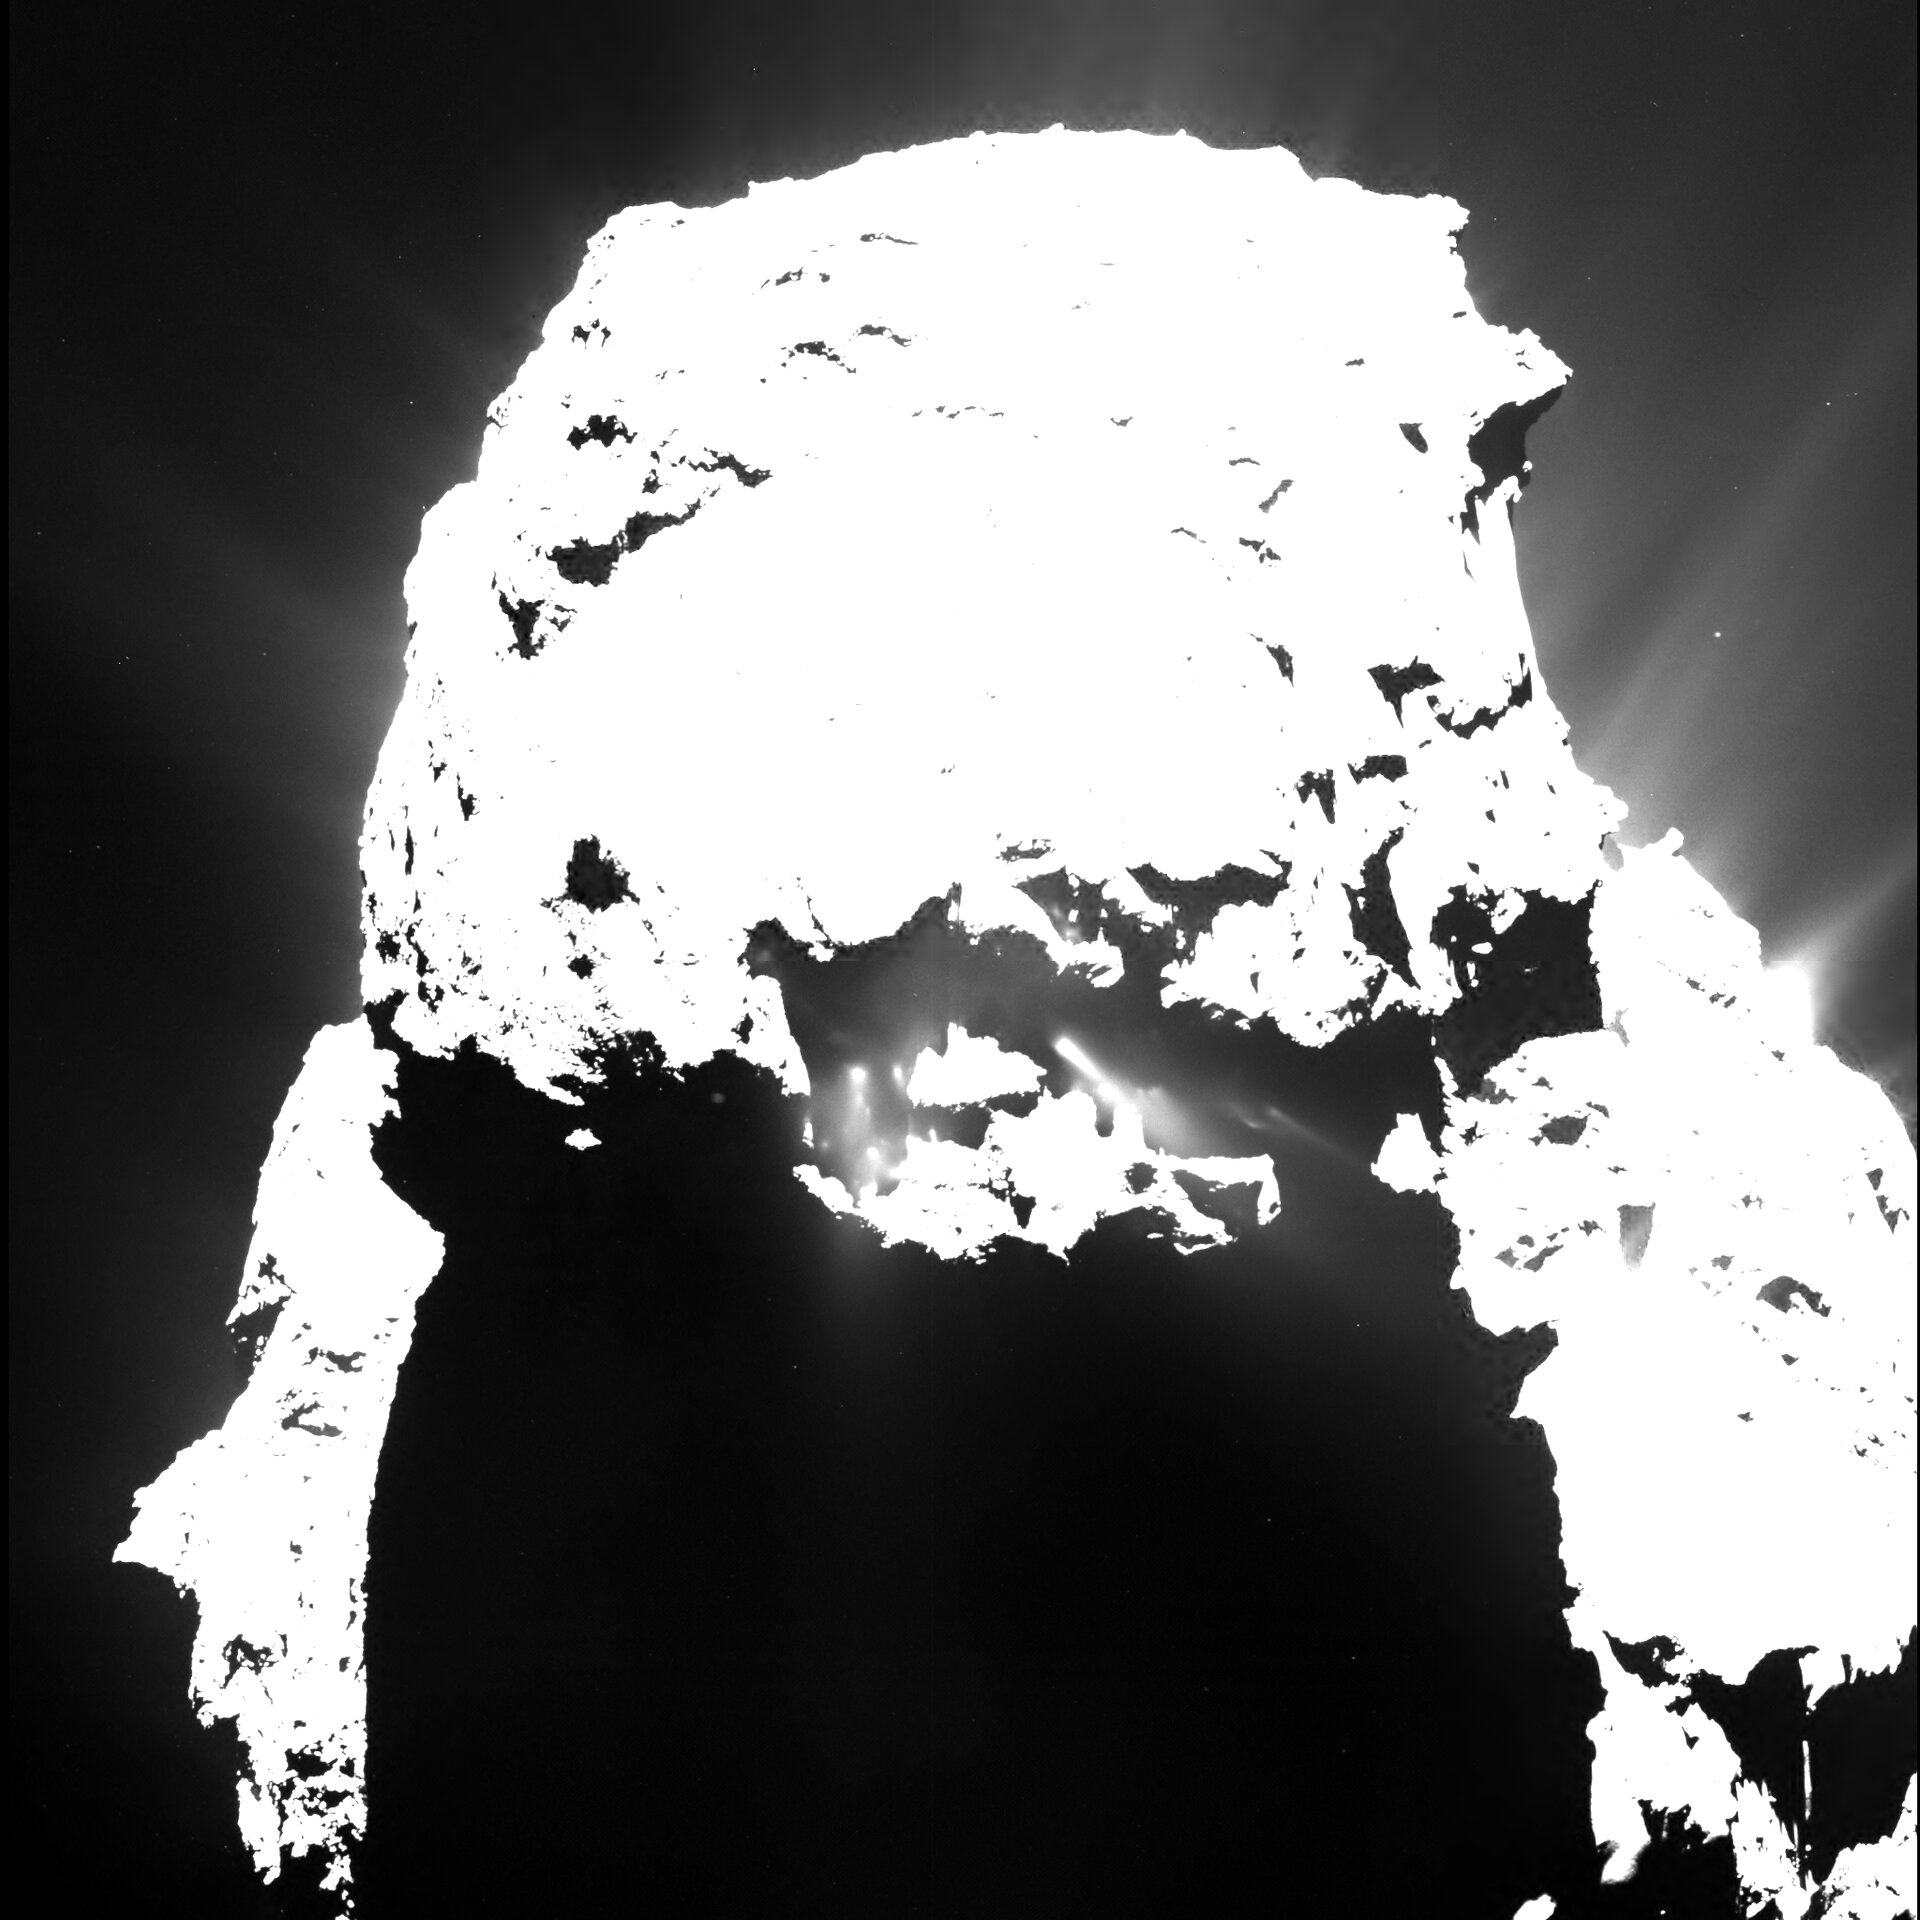 Comet on 25 April 2015 – Osiris 